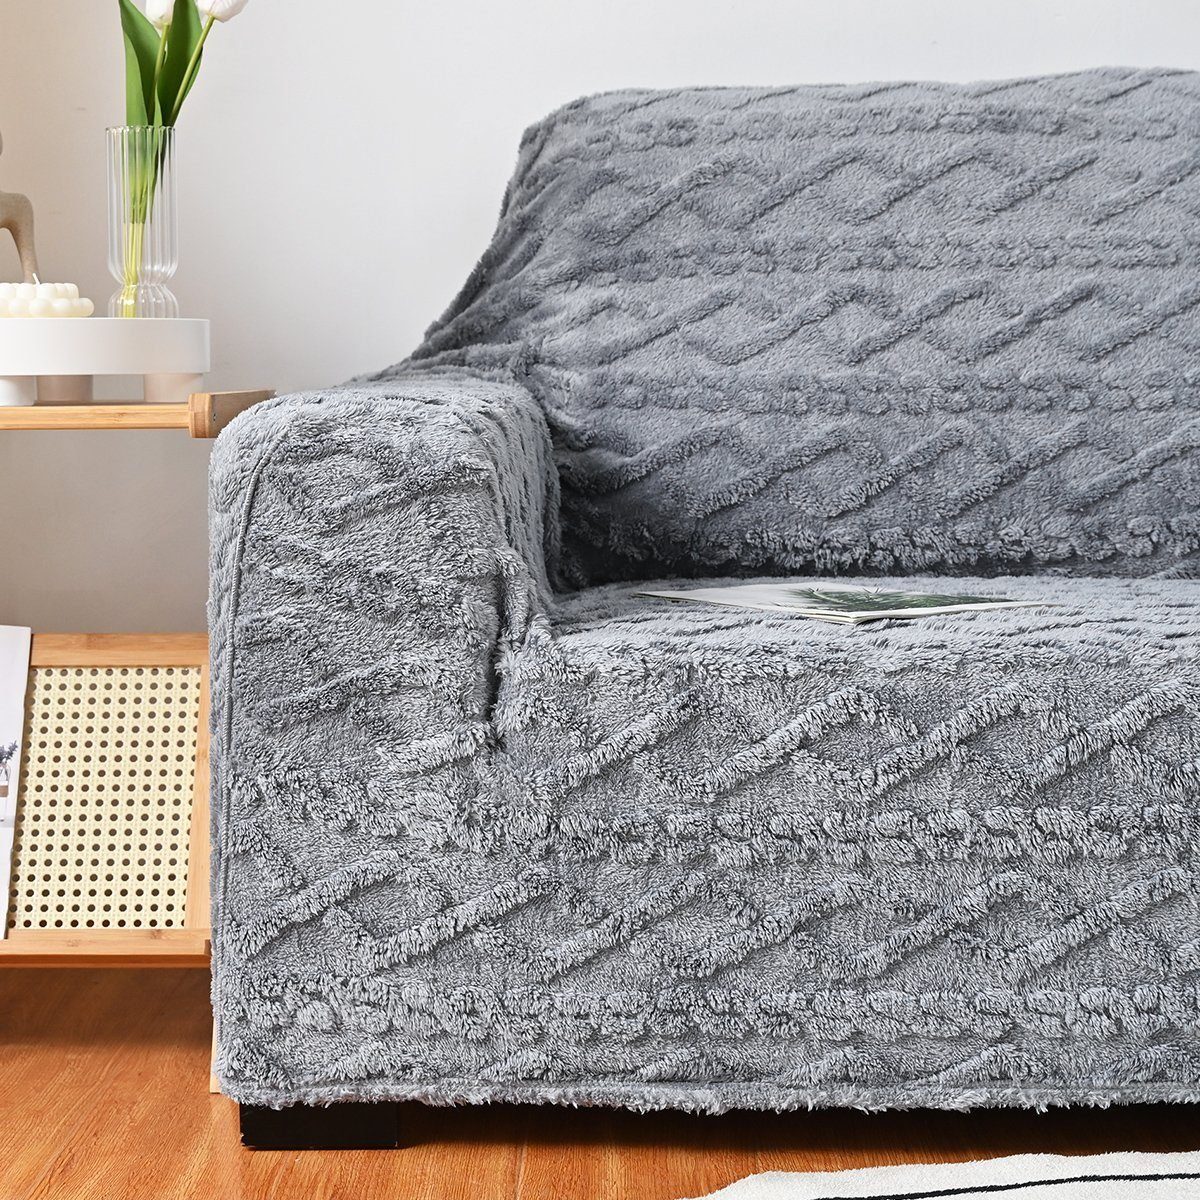 Sofabezug, HOMEIDEAS, elastischer Jacquard-Stoff Sofabezug Möbelbezüge Grau